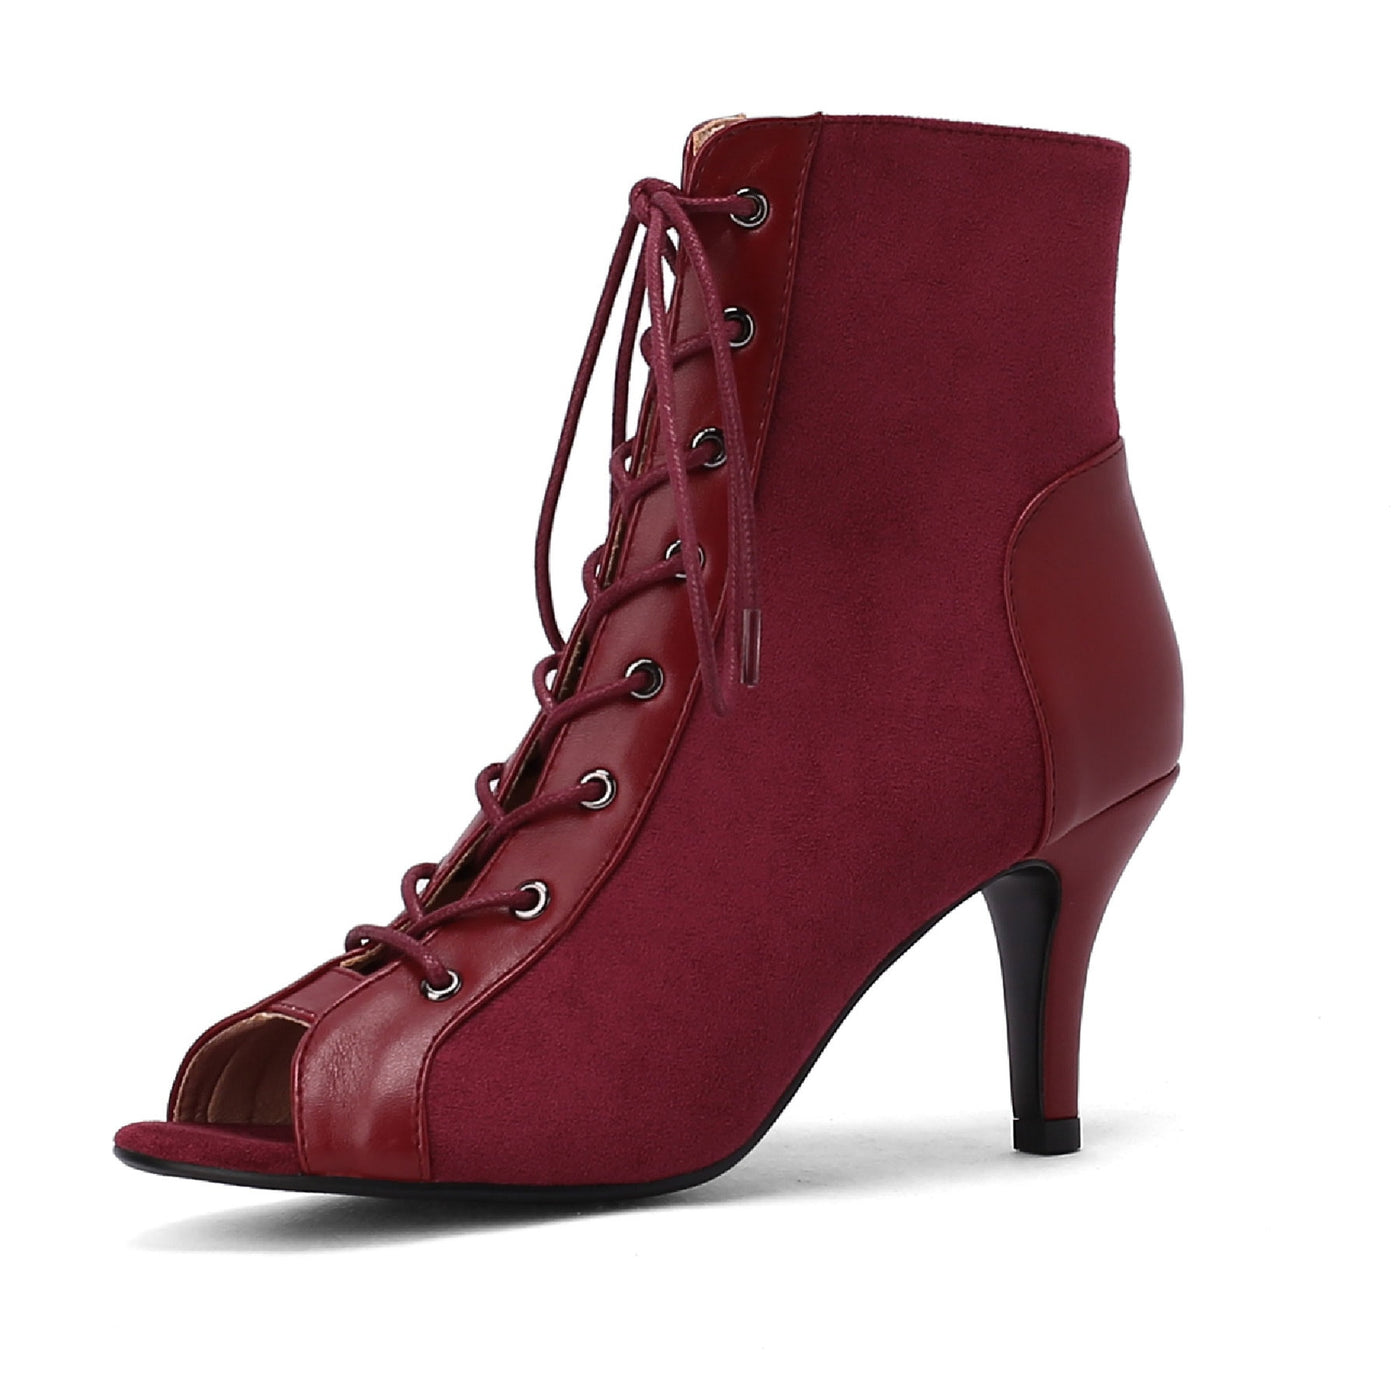 La Latina - Stiletto Leather Boots For Women